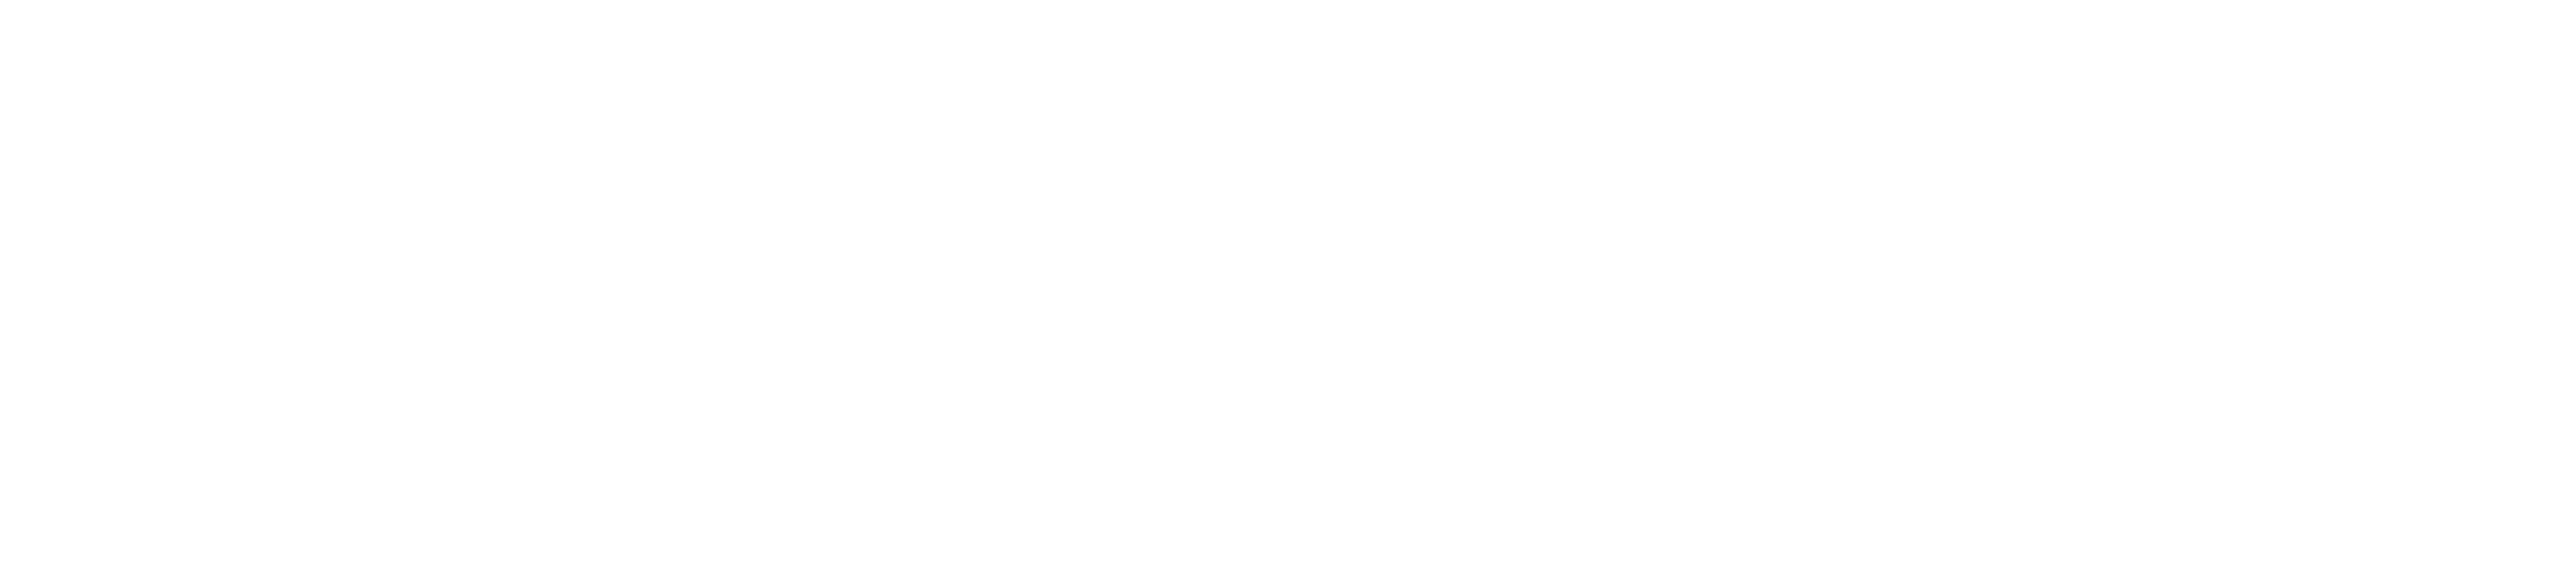 AP Tile and Bathrooms logo